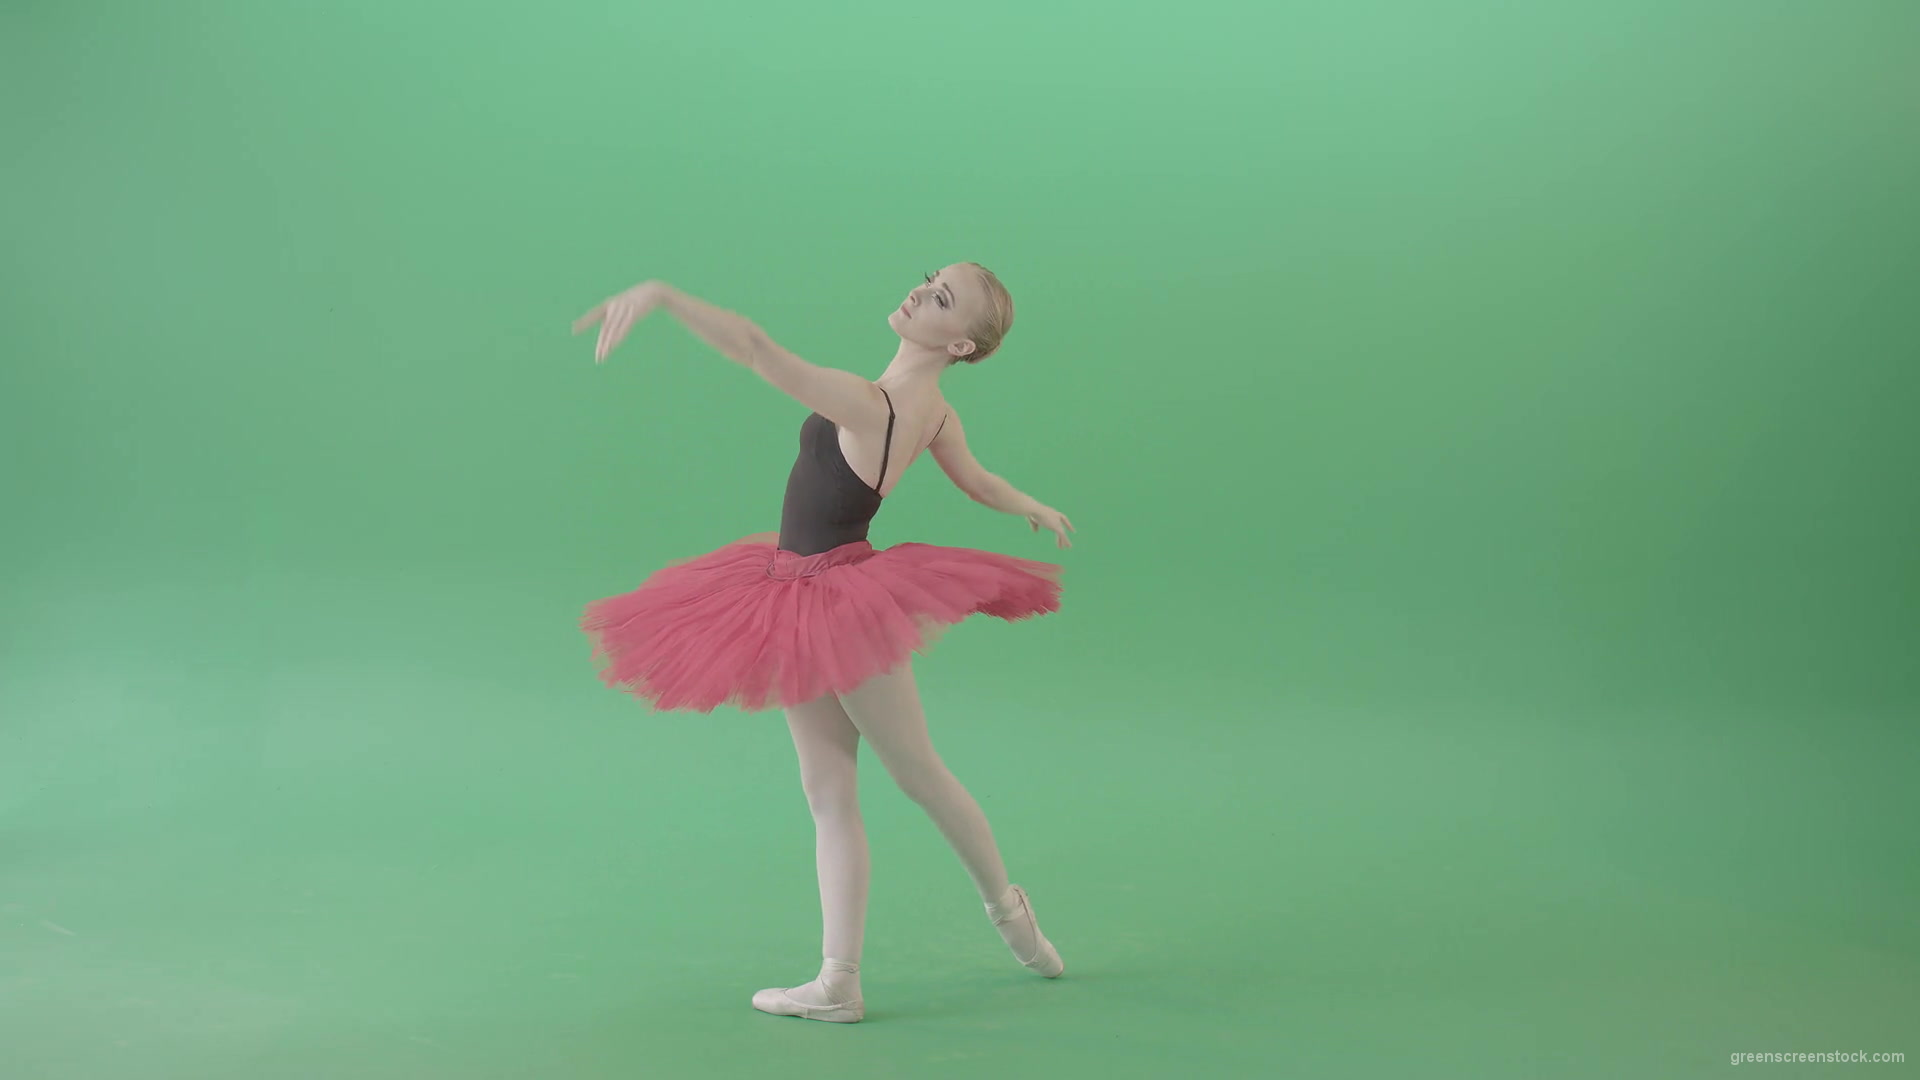 Elegant-elite-moves-by-ballet-dancing-blonde-girl-on-green-screen-4K-Video-Footage-1920_005 Green Screen Stock